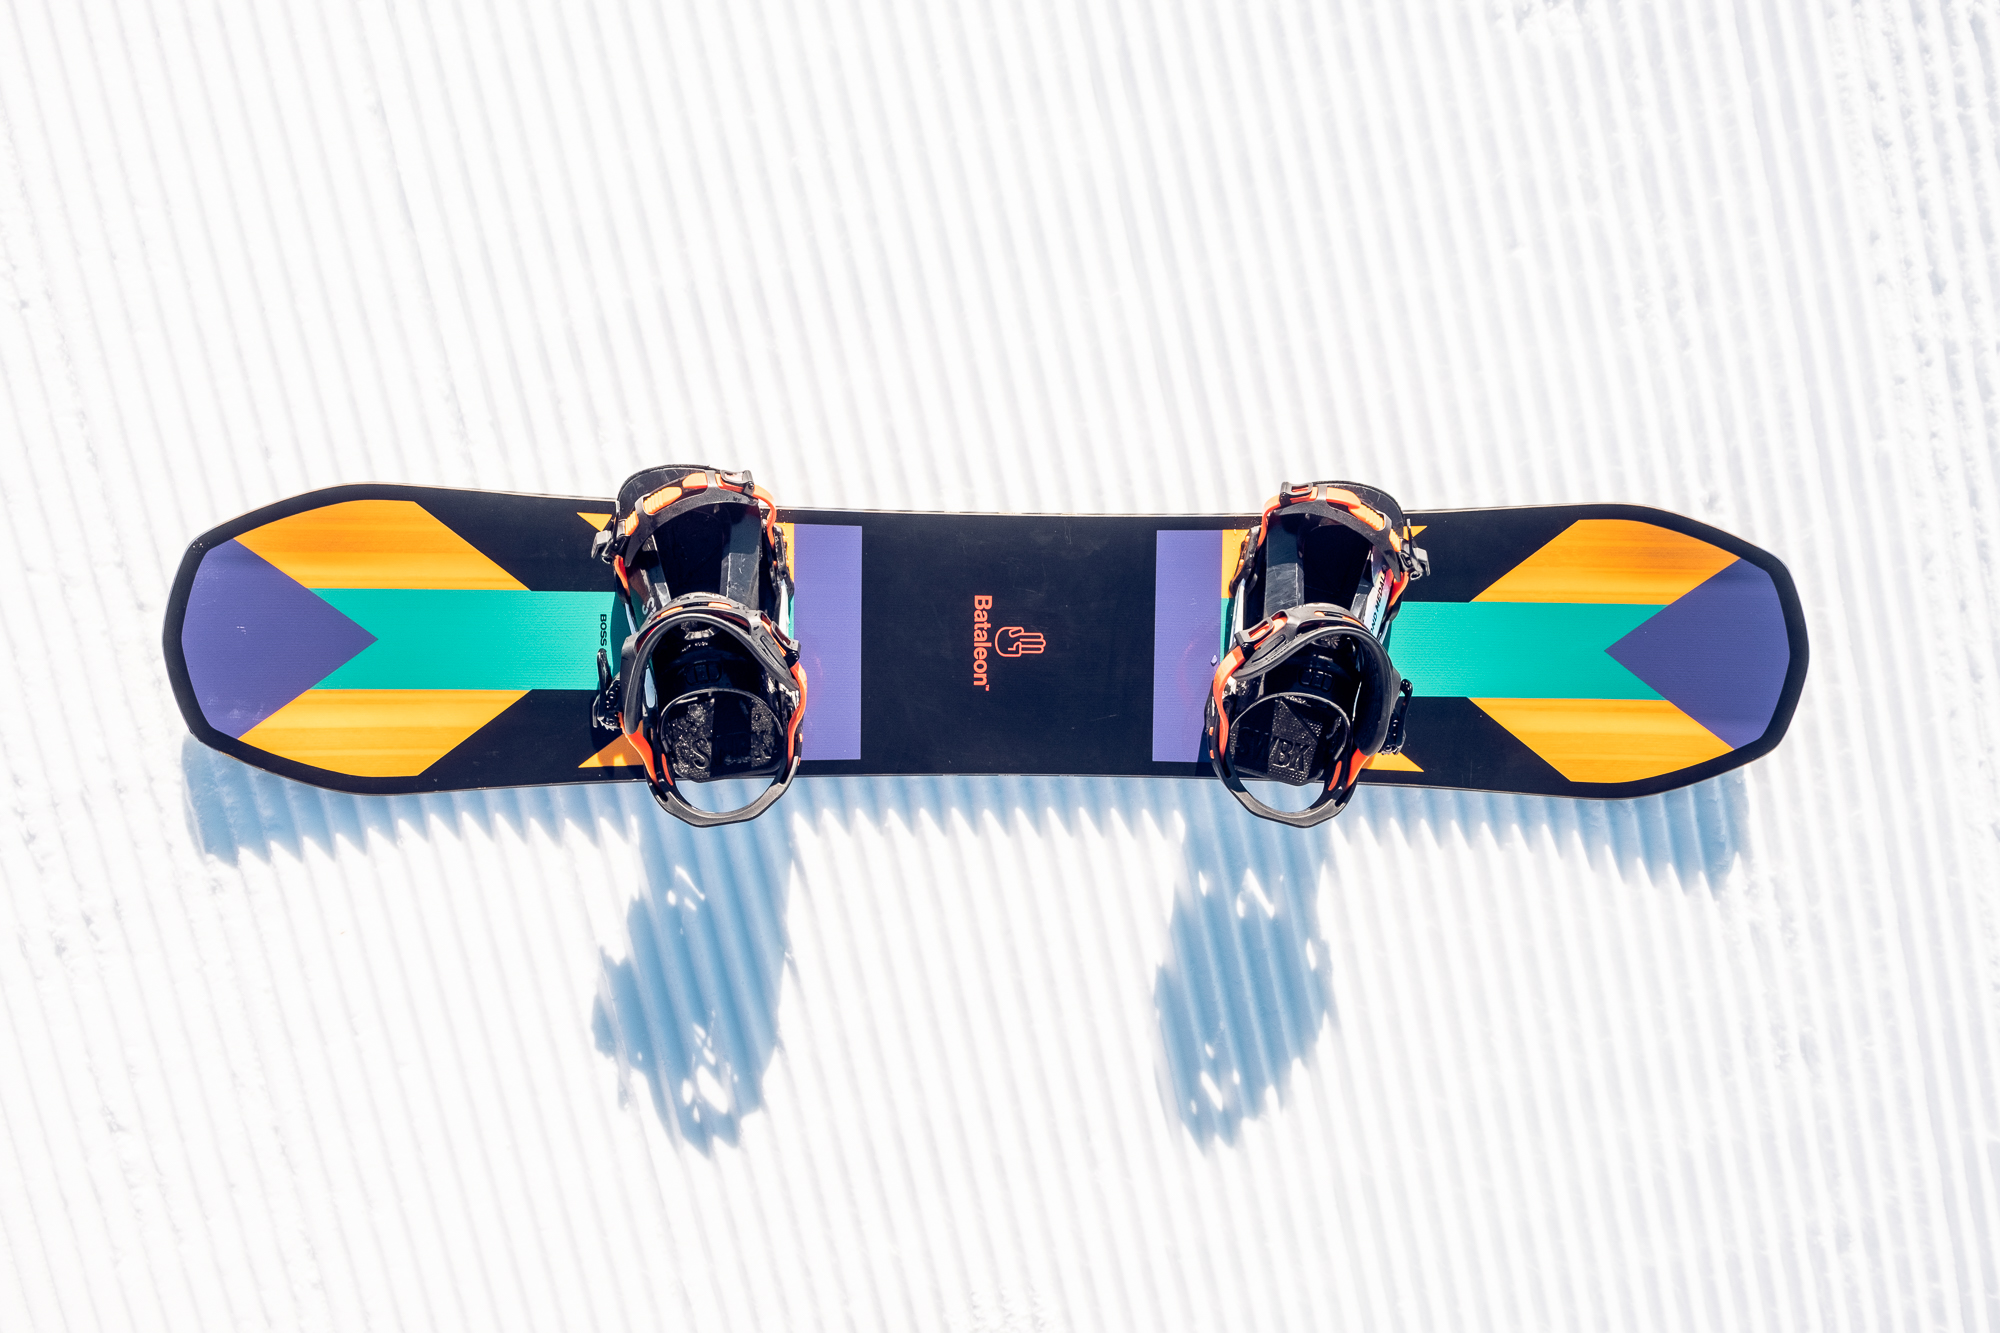 Bataleon Boss Hybrid 3BT Camber Snowboard